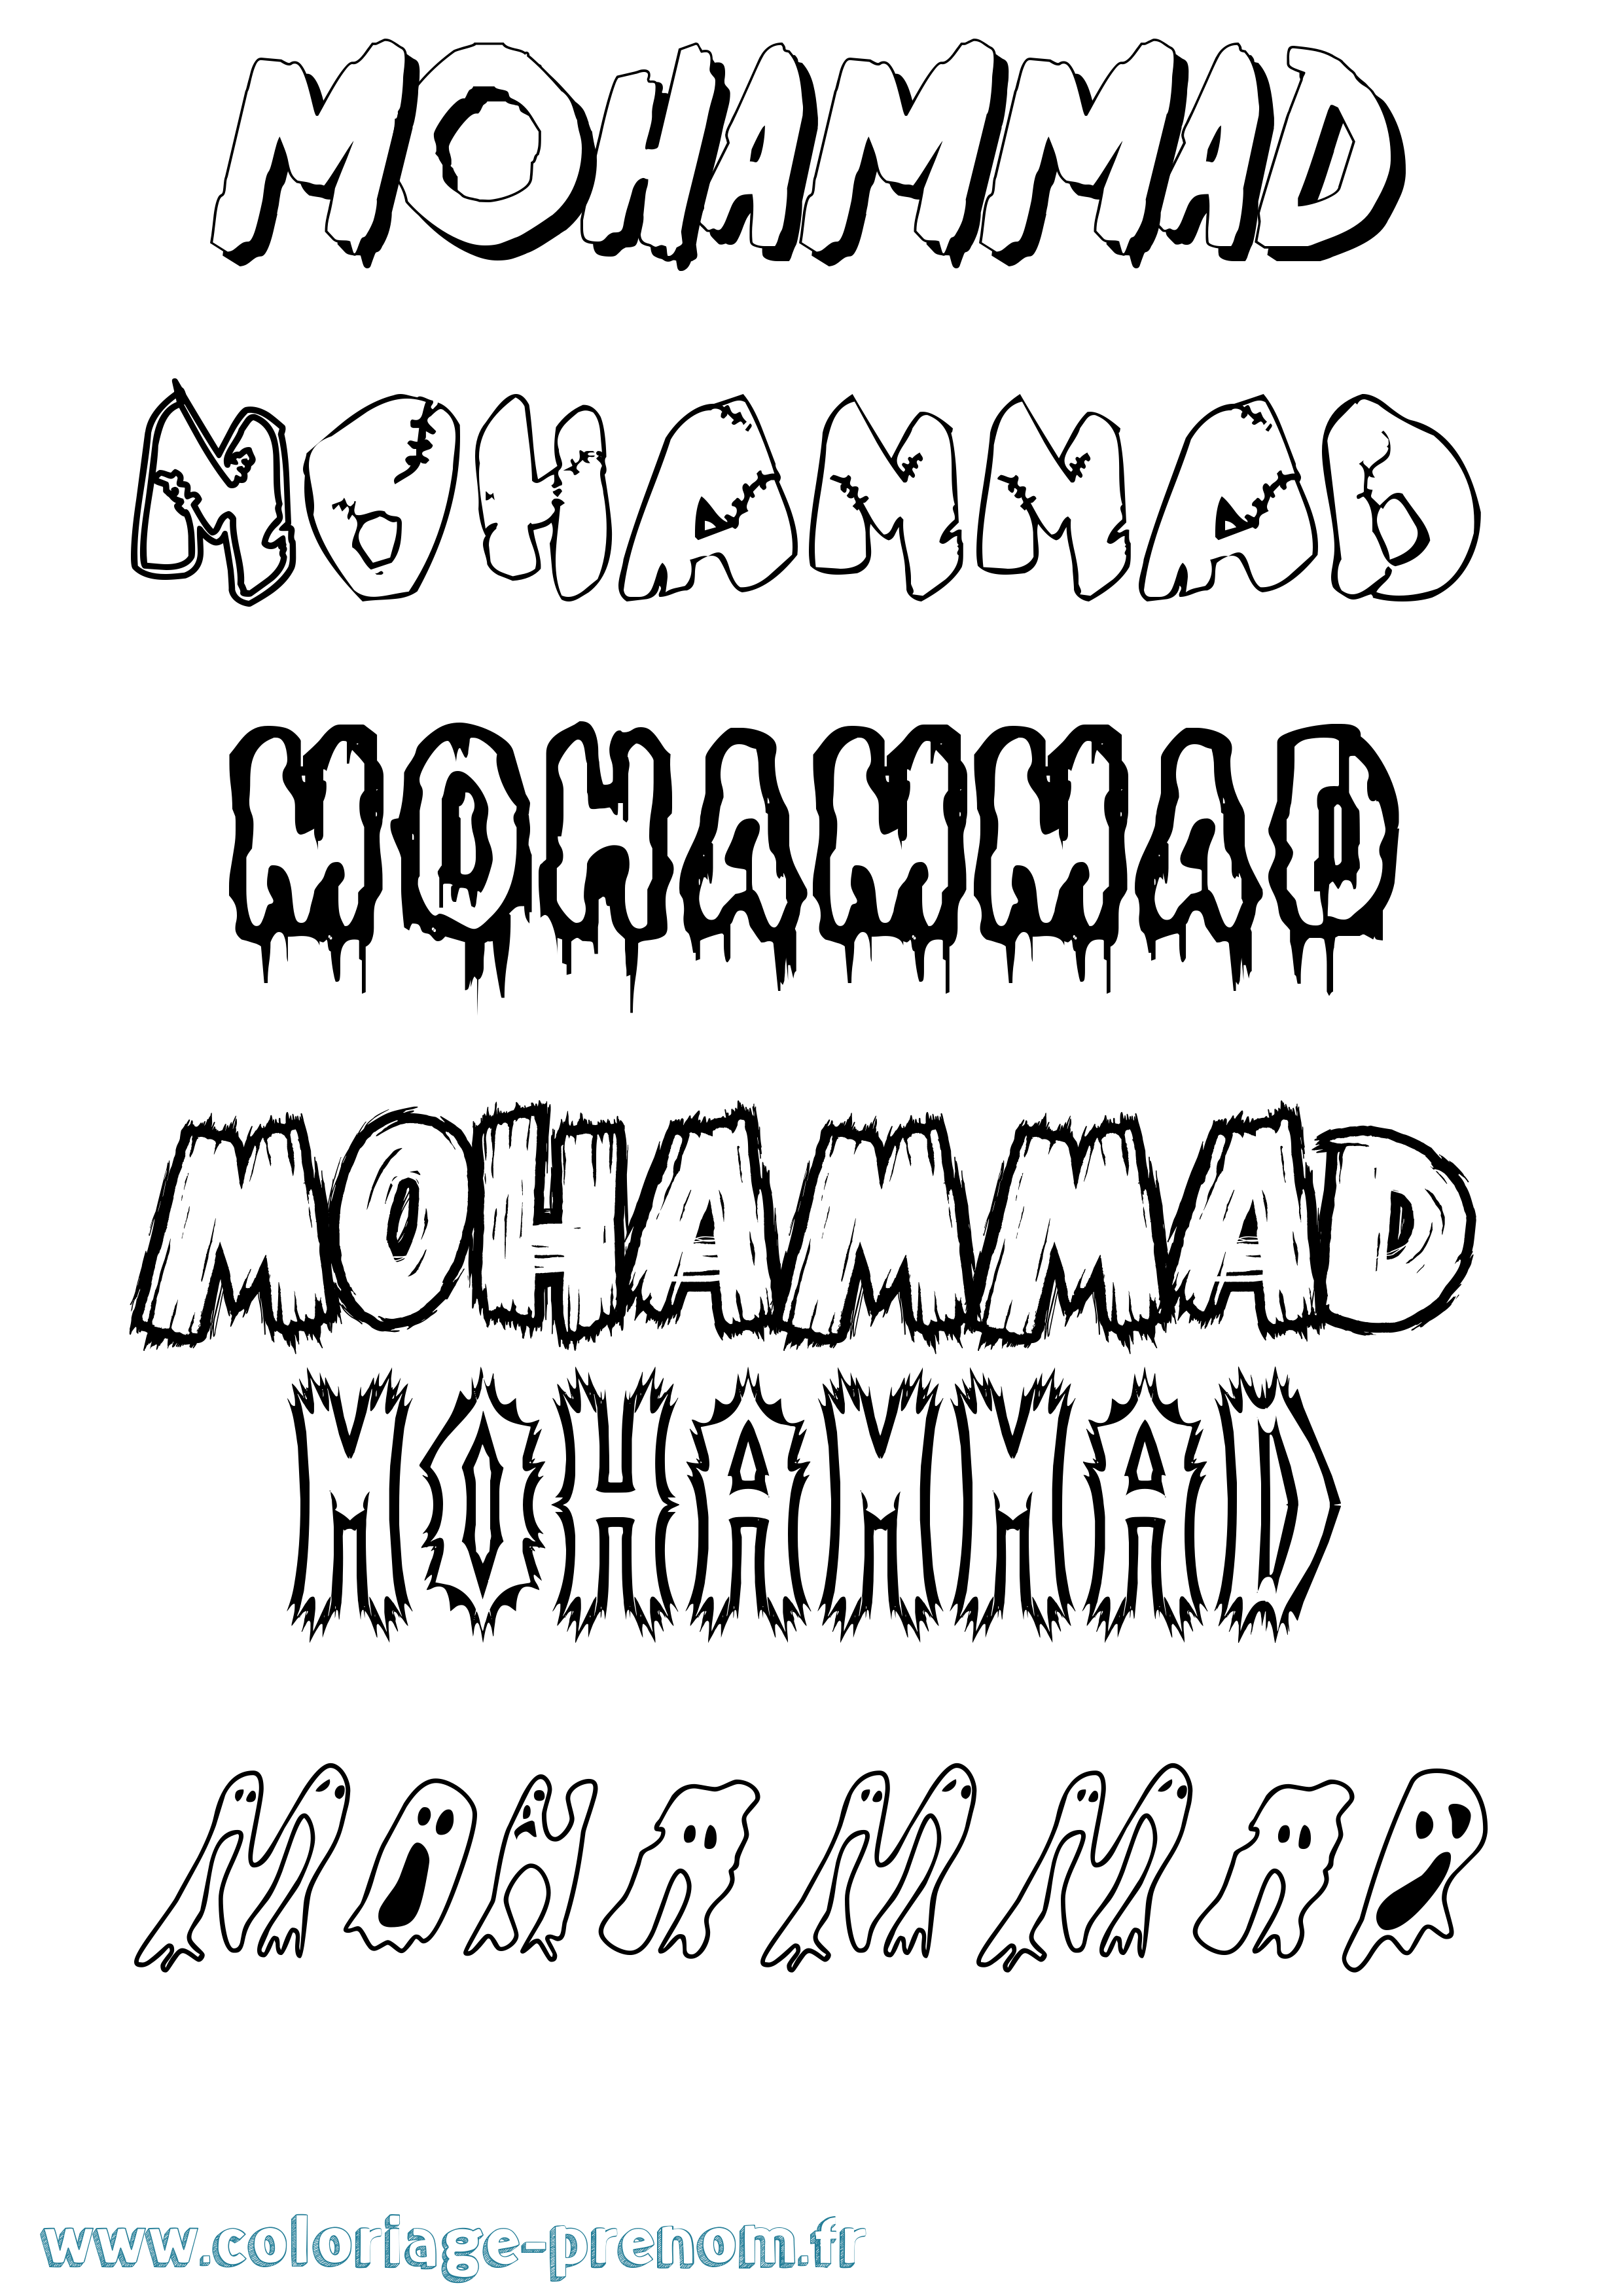 Coloriage prénom Mohammad Frisson